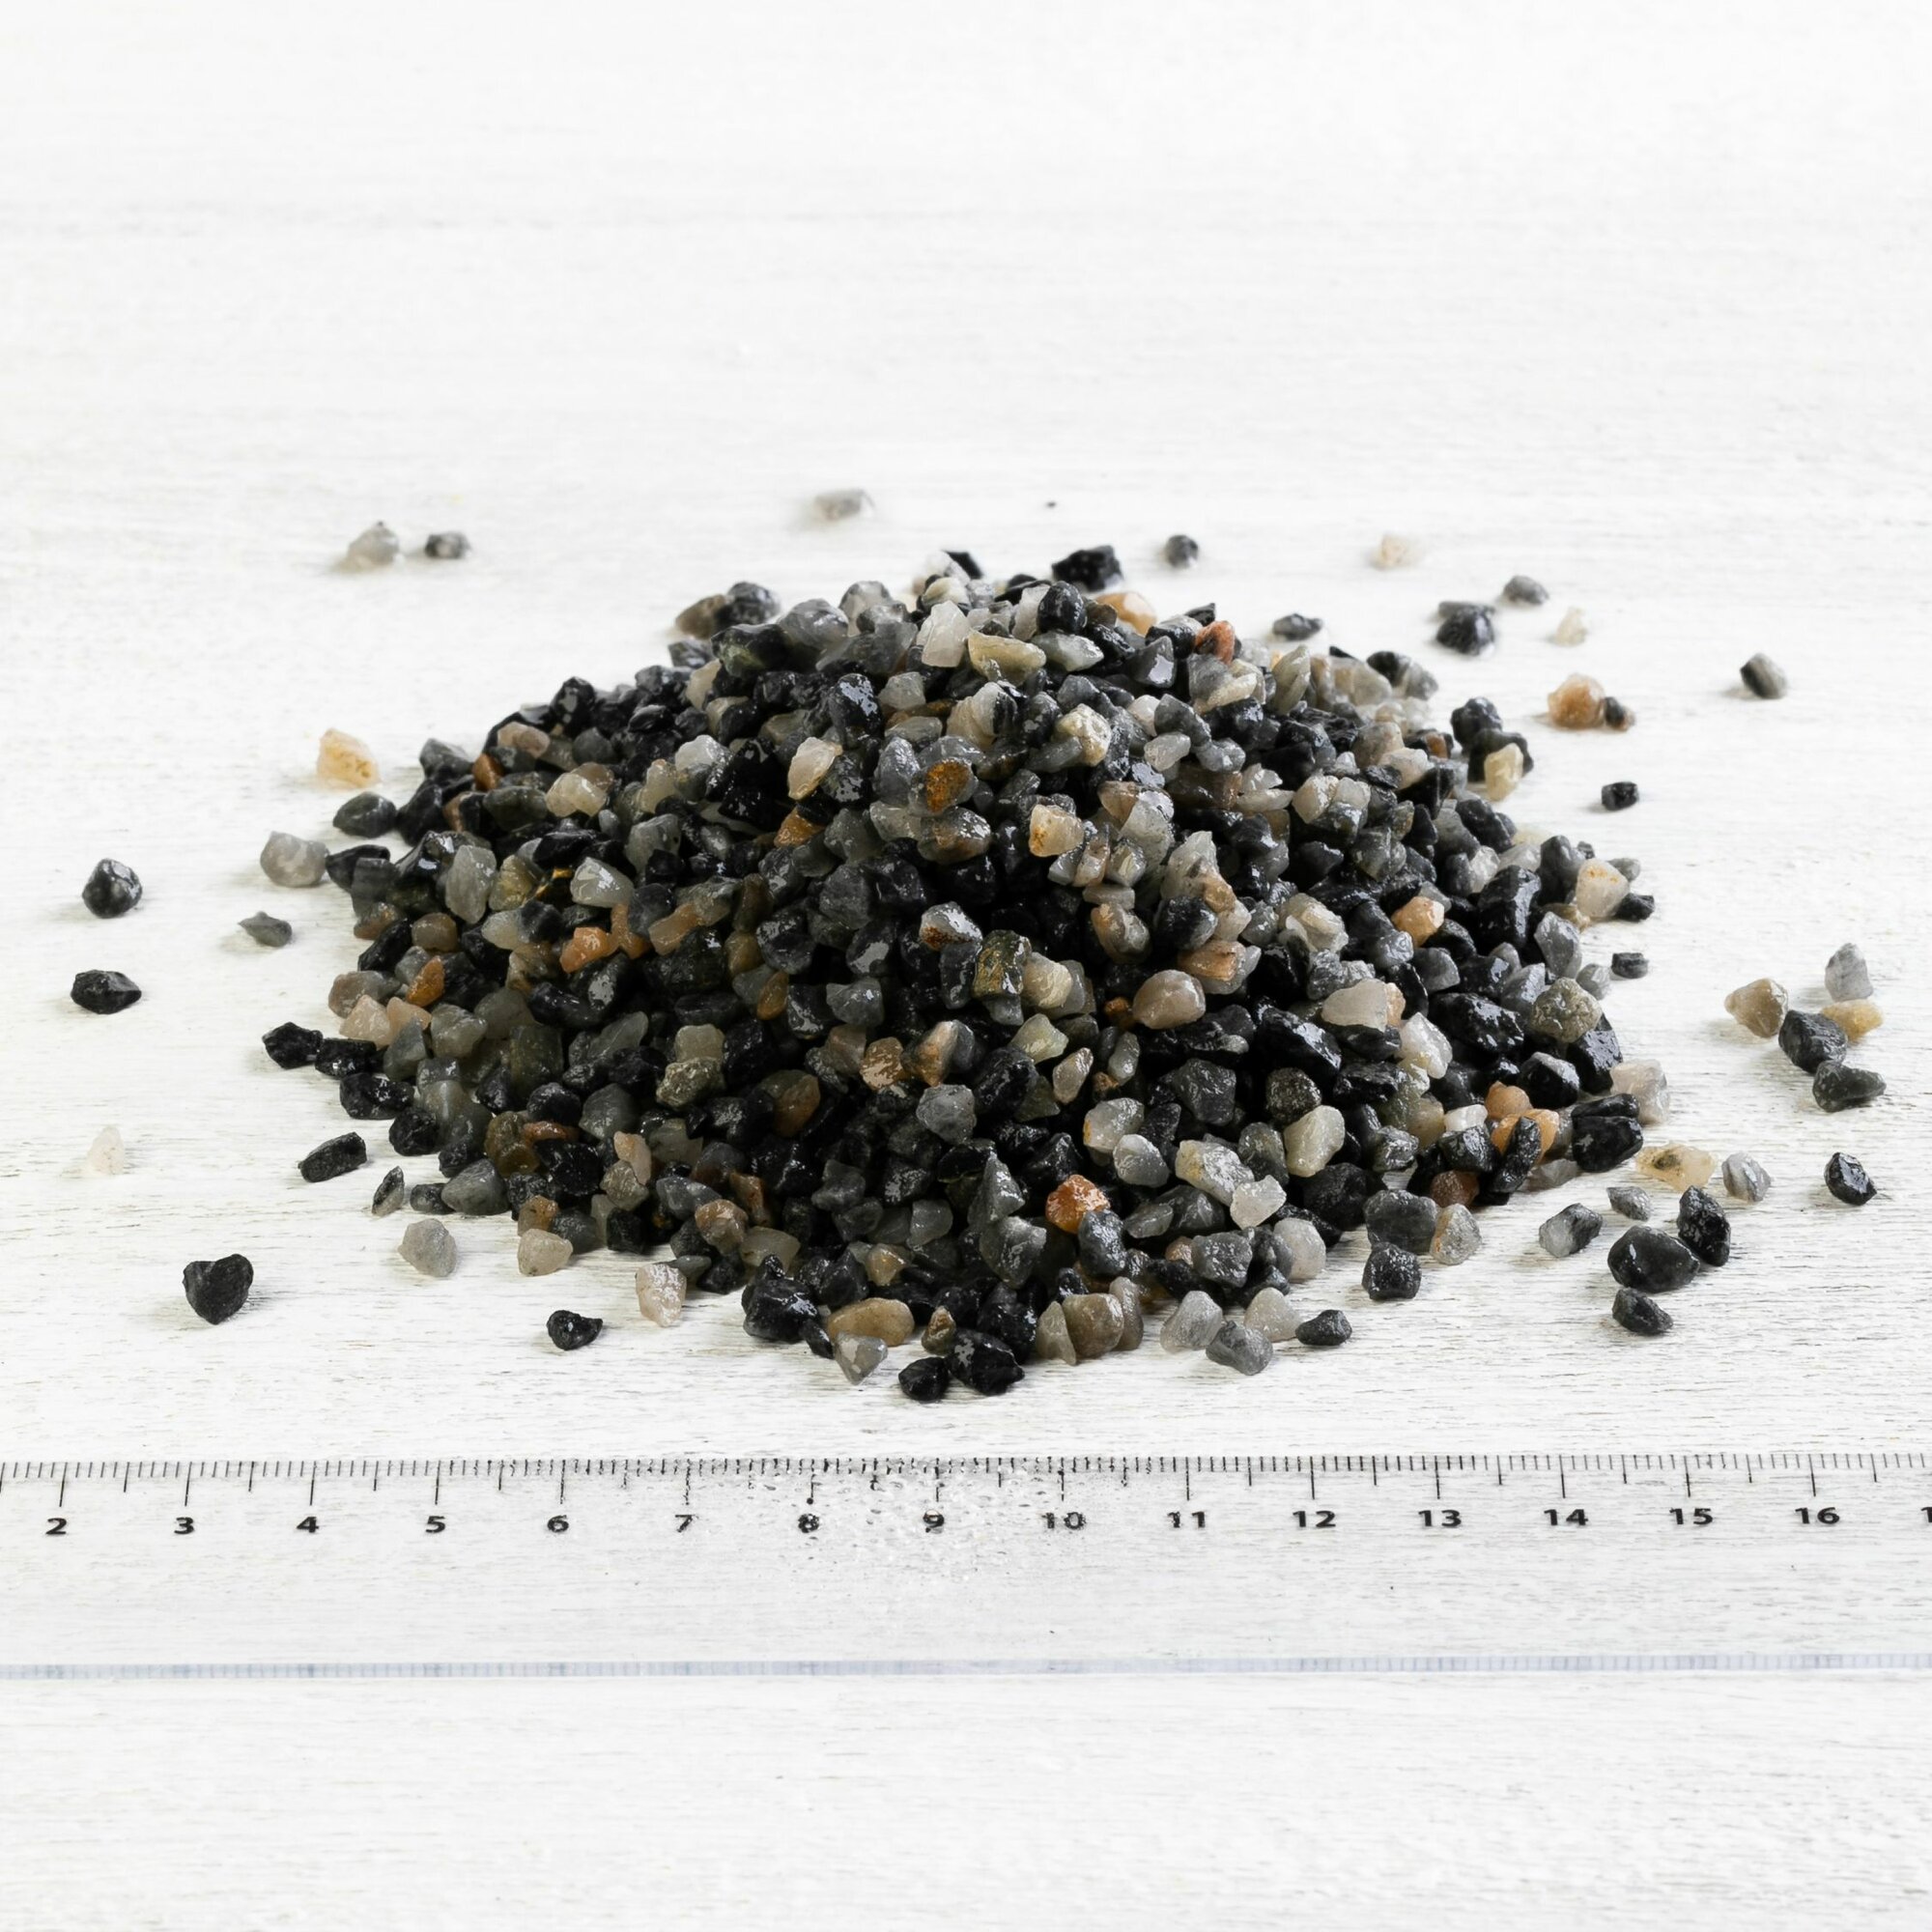 Кварц серый бобровский кварцит фр. 2-5 мм, 3 кг (341). Каменная крошка, декоративный грунт